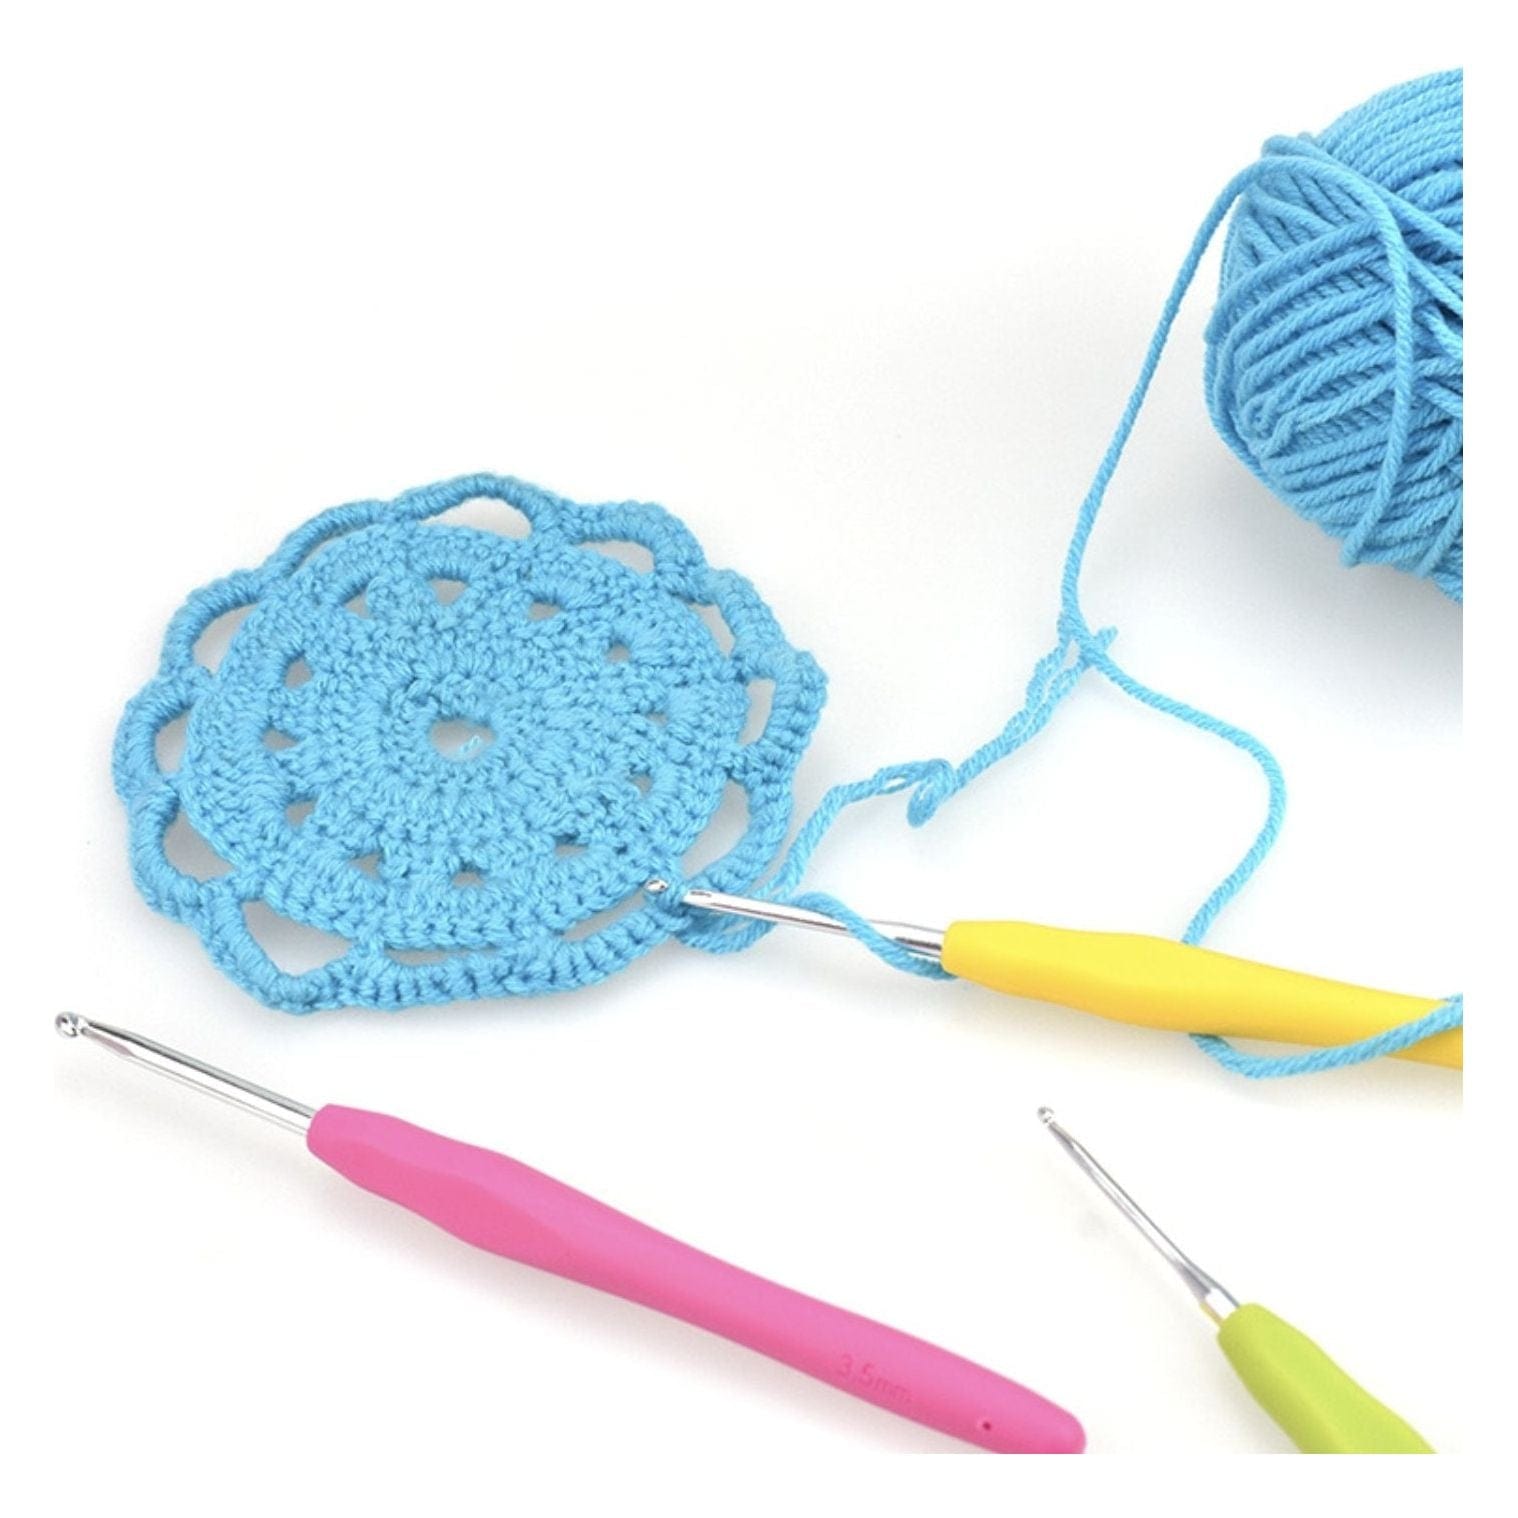 https://cdn.shopify.com/s/files/1/0070/3781/2851/products/ergonomic-soft-rubber-handle-crochet-hook-for-arthritic-hands-12-sizes-450541_1600x.jpg?v=1693893504